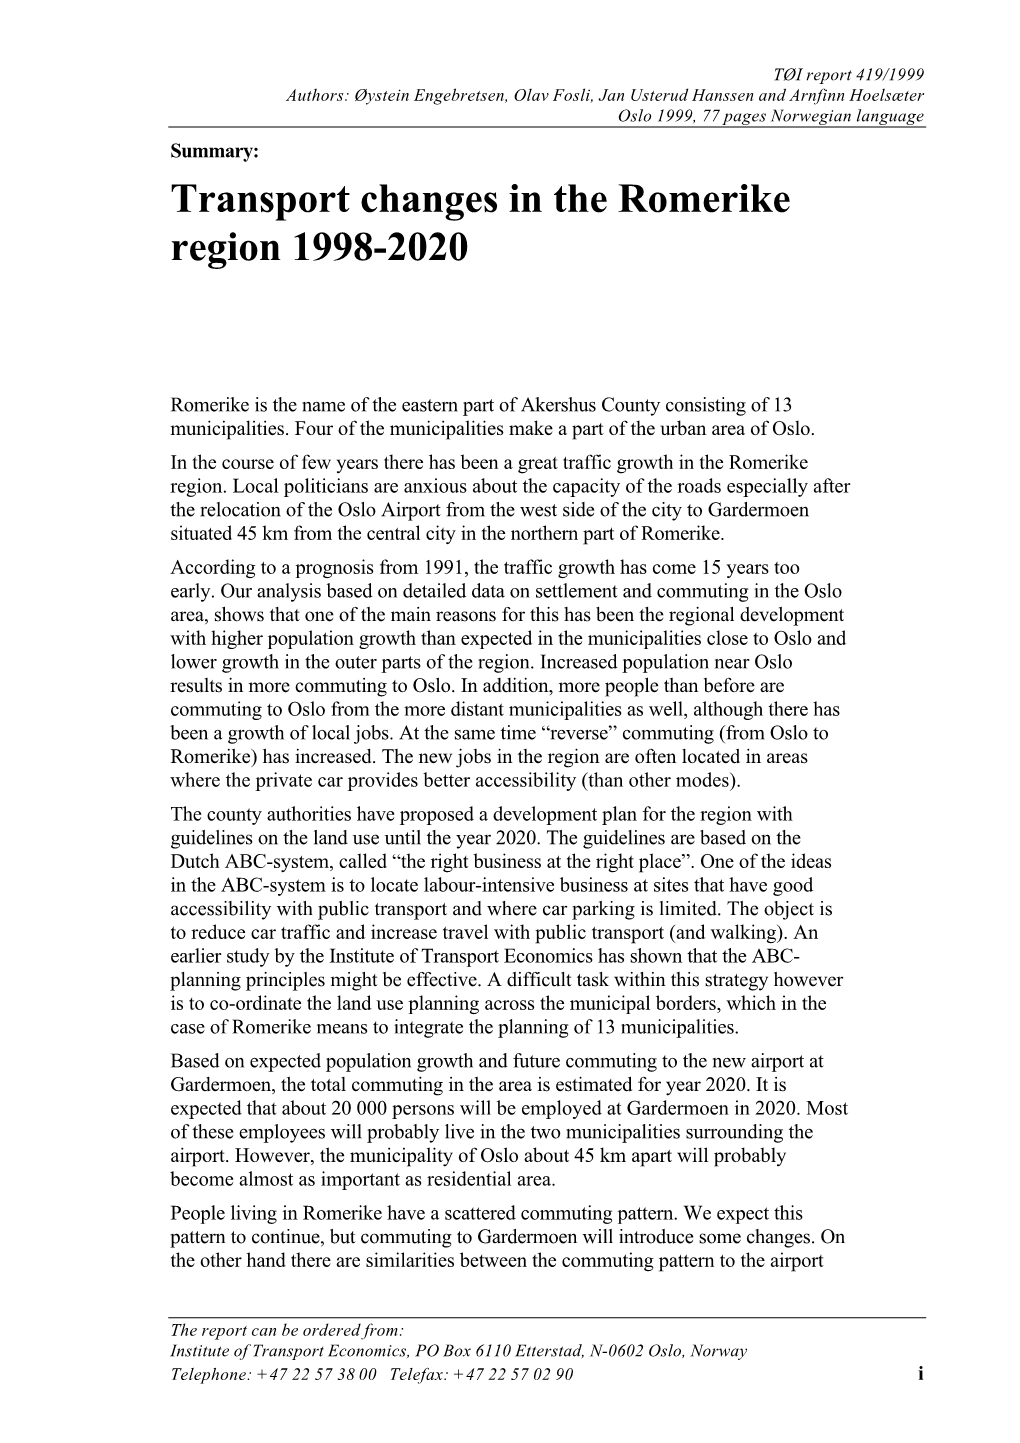 Transport Changes in the Romerike Region 1998-2020